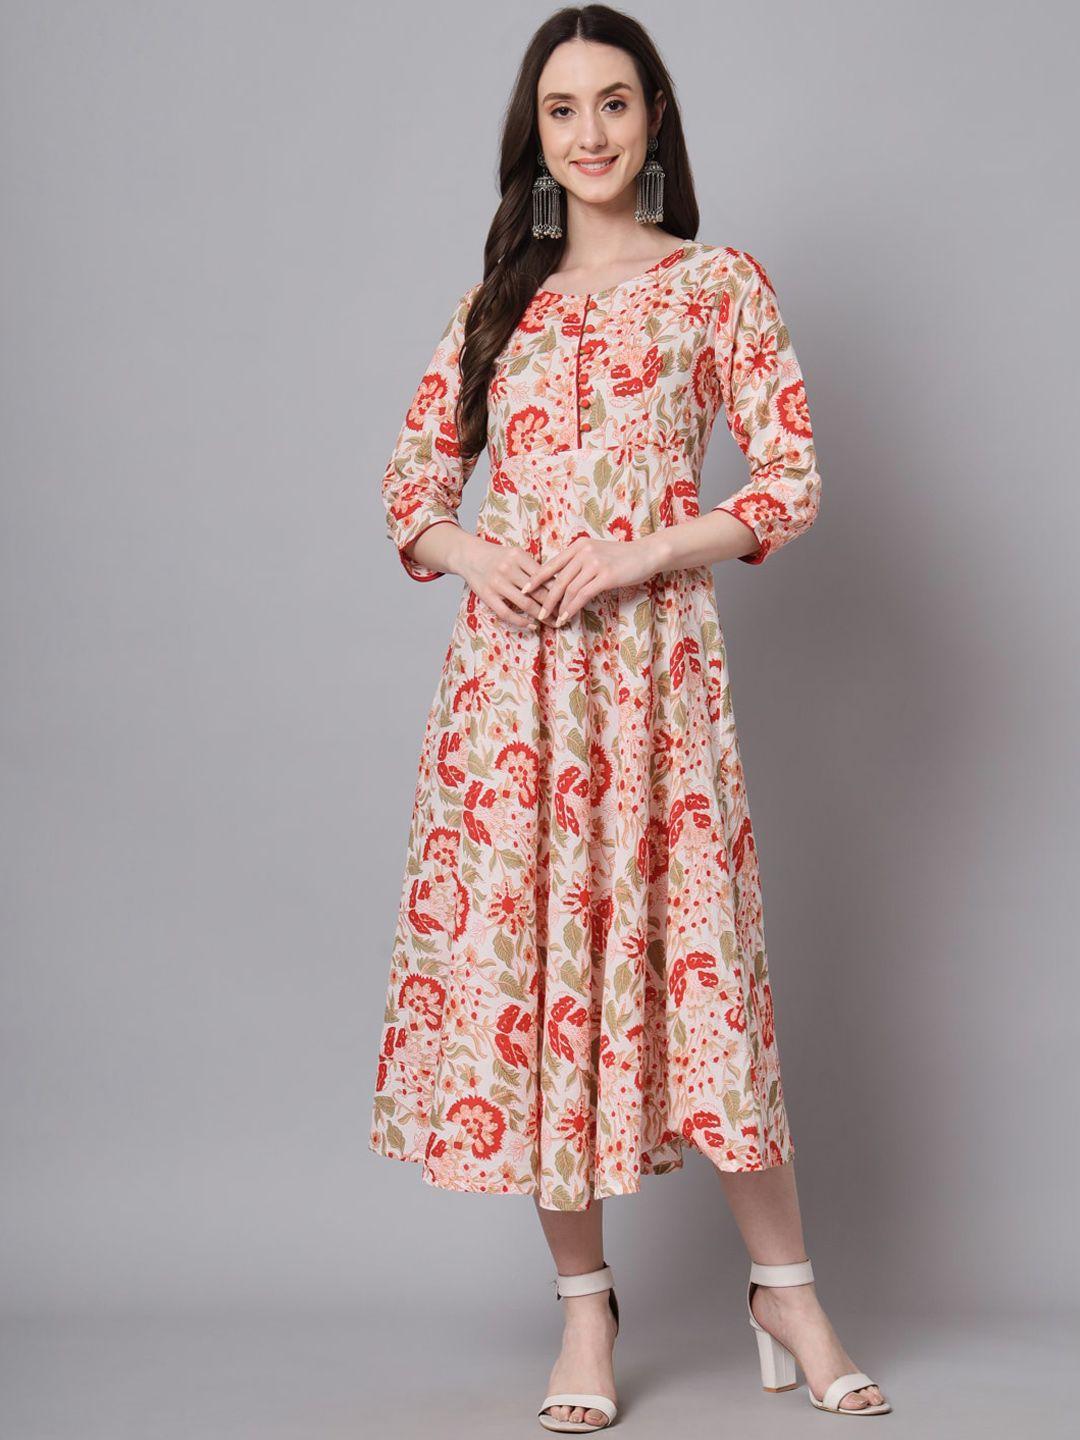 rangmayee floral printed dress